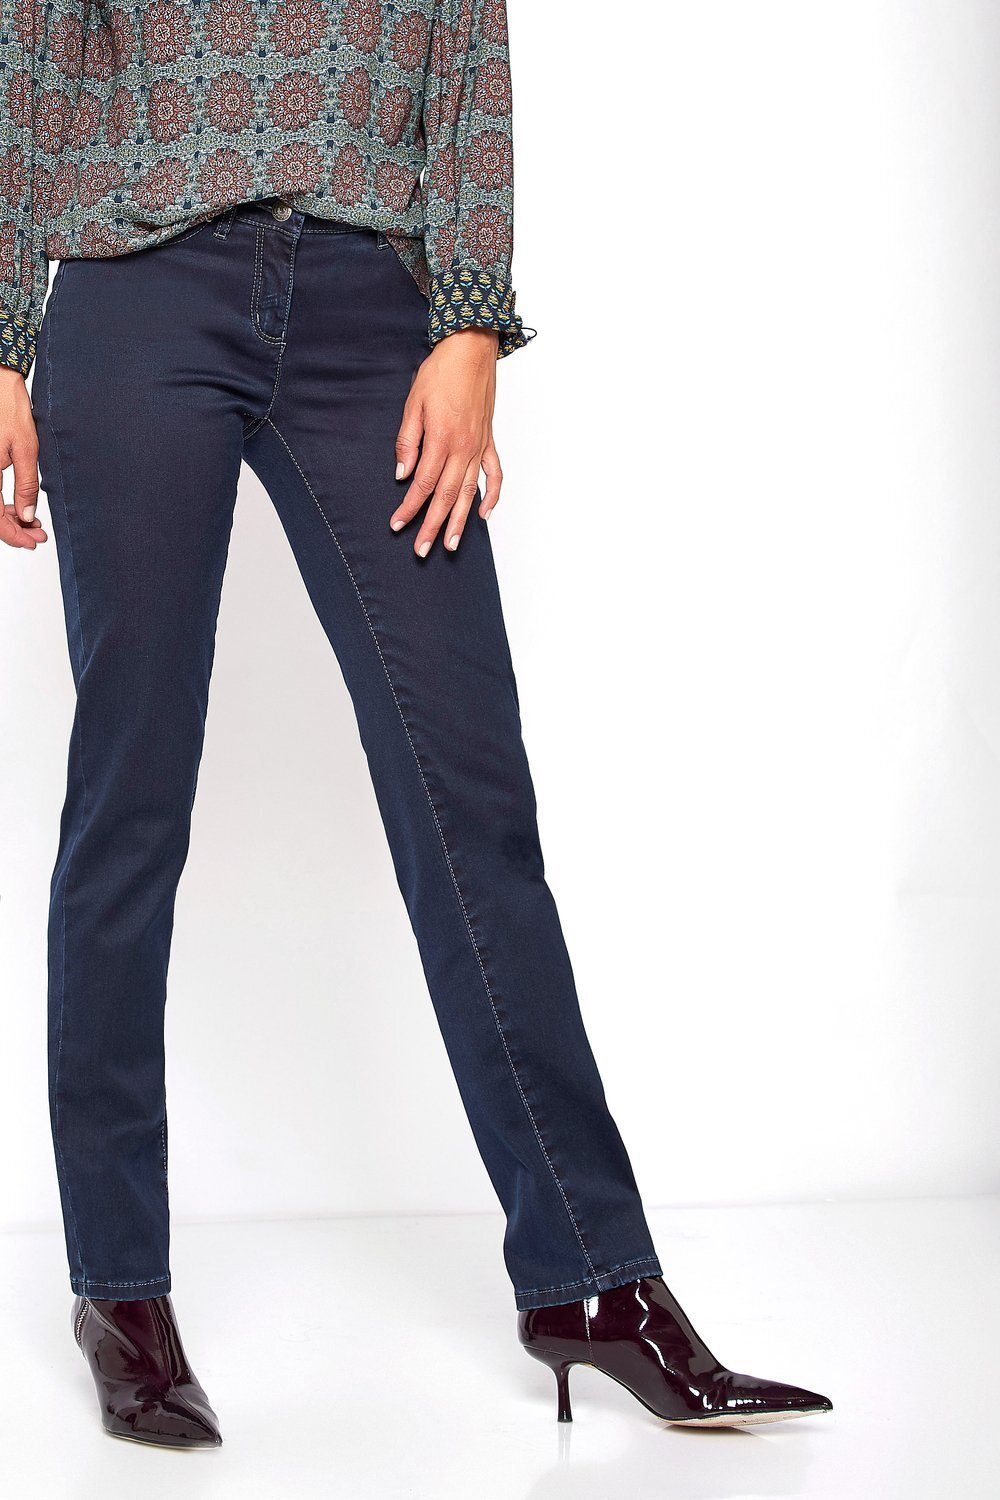 TONI 5-Pocket-Jeans Perfect Shape mit Shaping-Effekt an Bauch und Po darkblue - 058